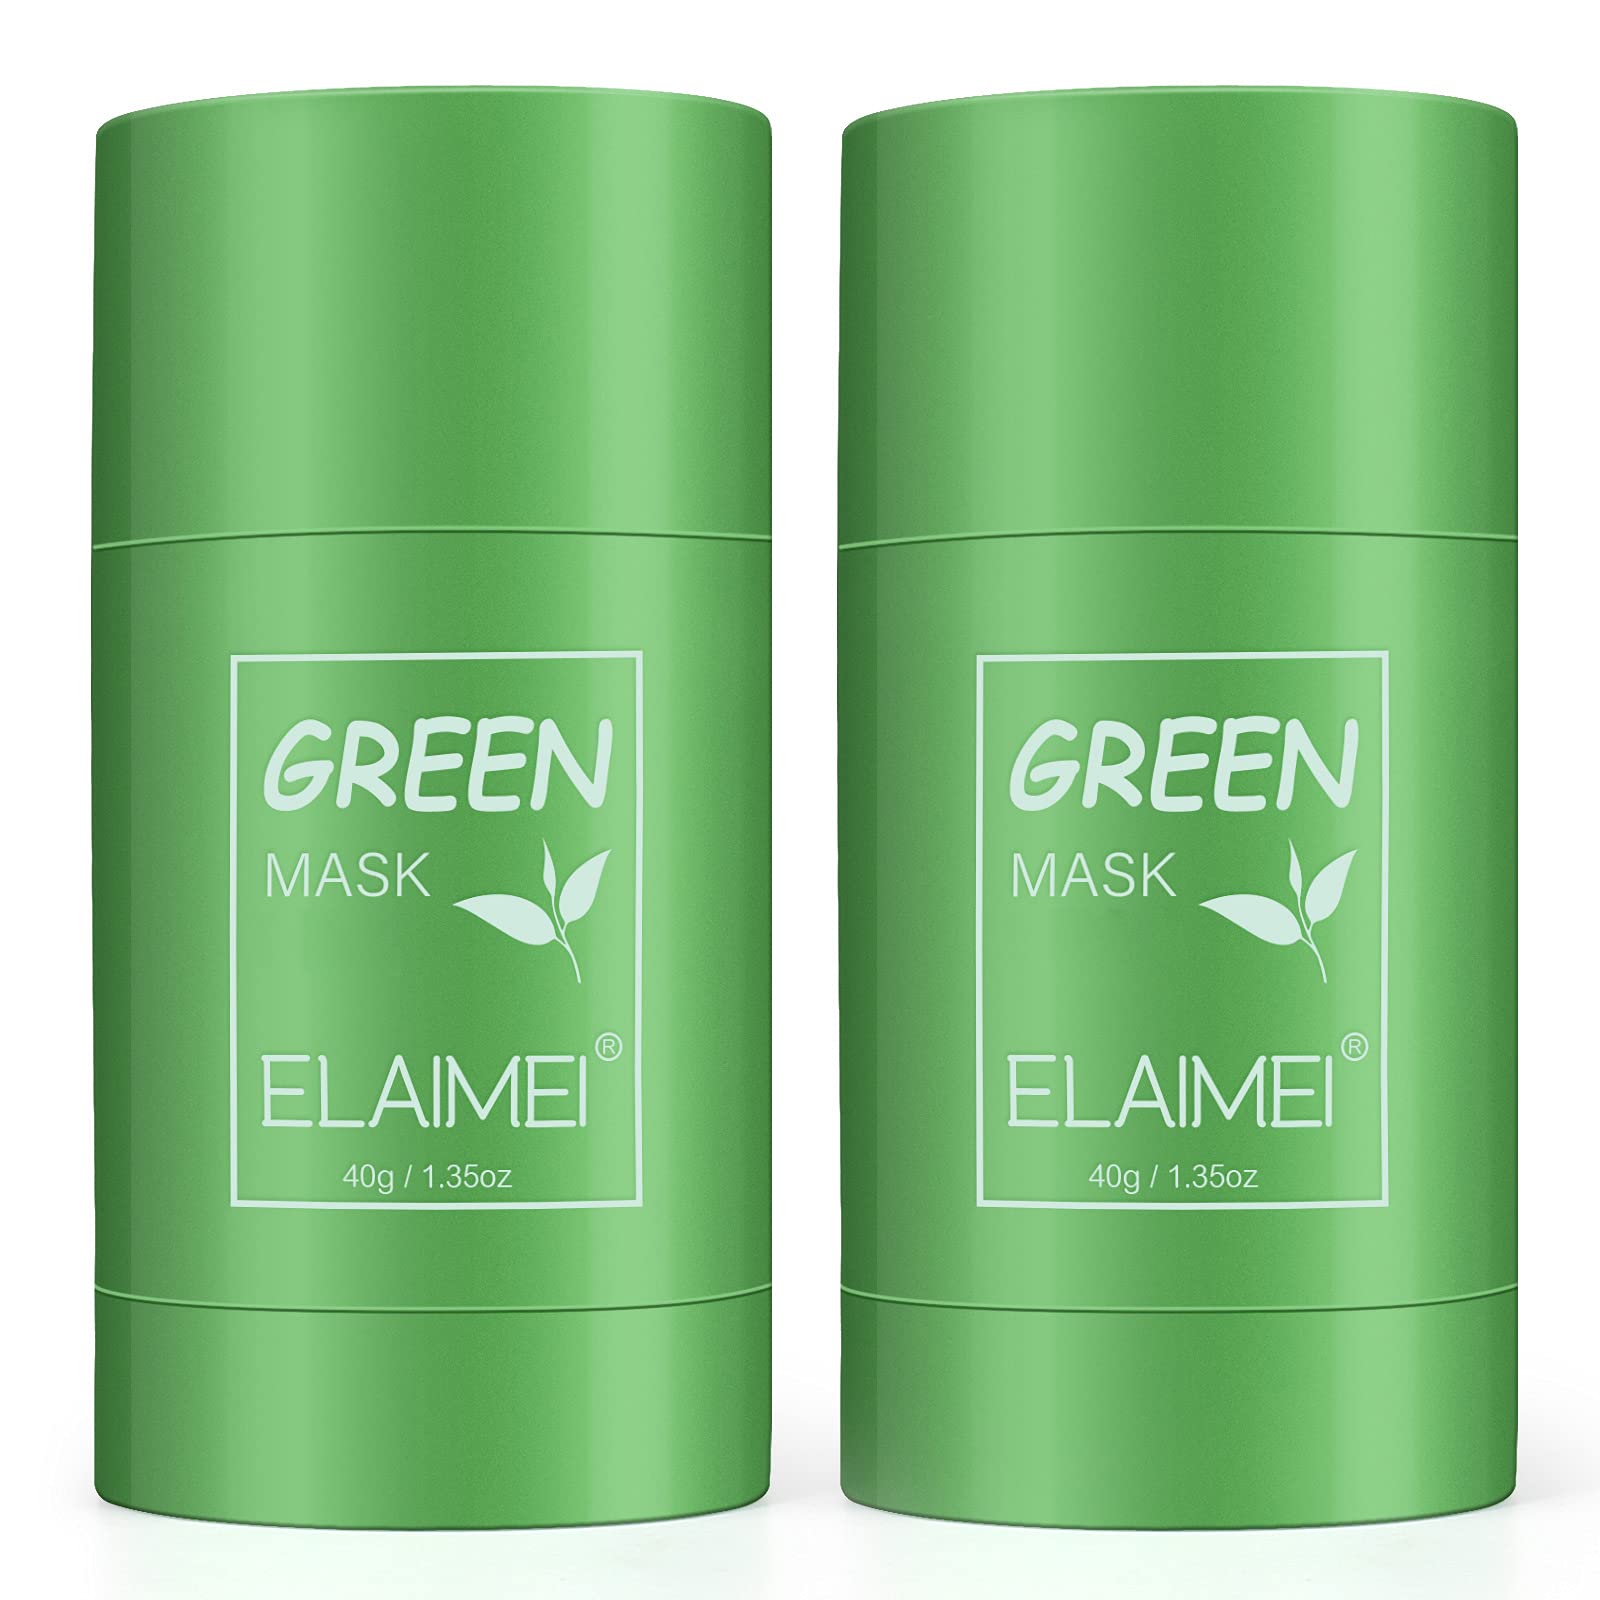 Green Tea Mask Stick Facial Cleansing Oil Acne Blackhead Control Deep Clean  Pore